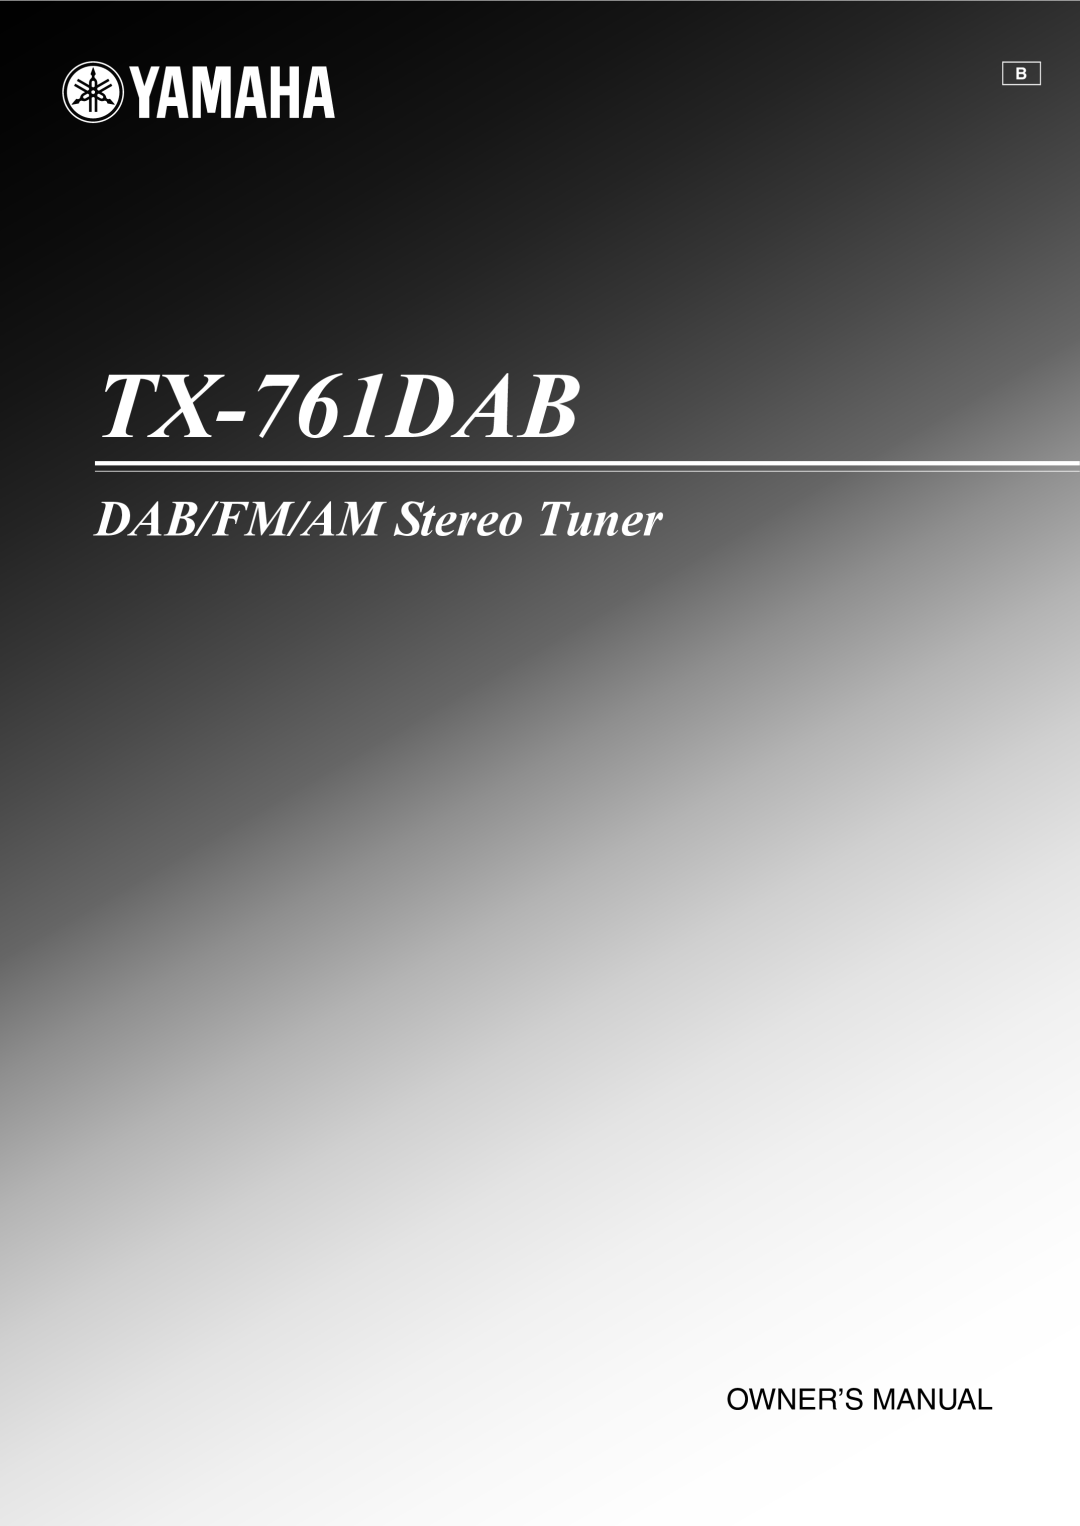 Yamaha TX-761DAB owner manual DAB/FM/AM Stereo Tuner 